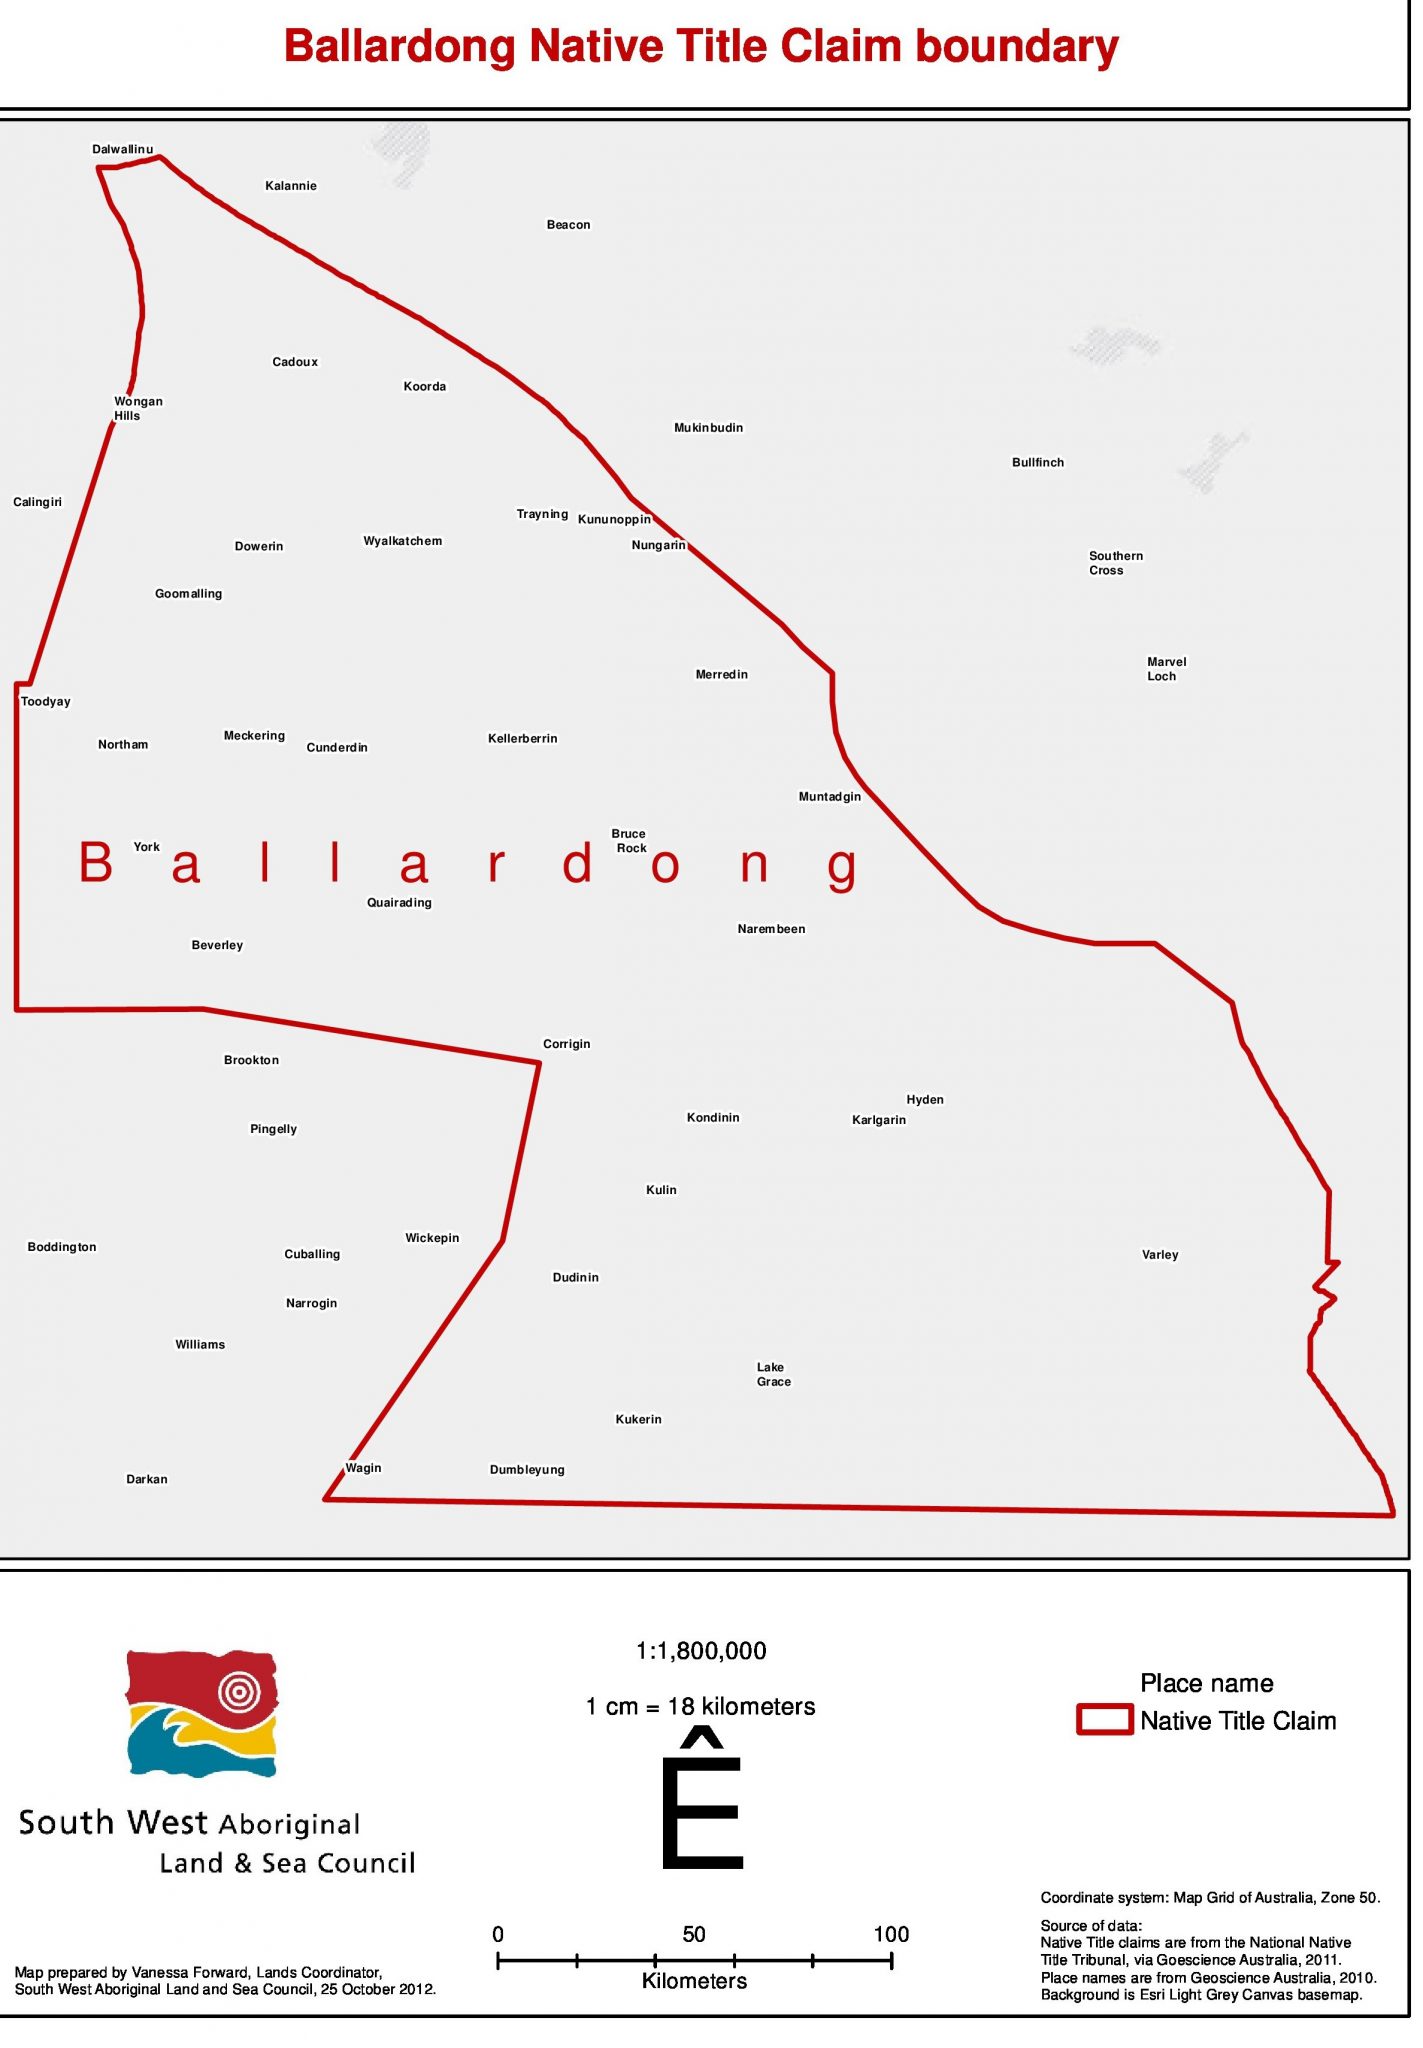 Ballardong Native Title Claim Boundary. Courtesy SWALSC